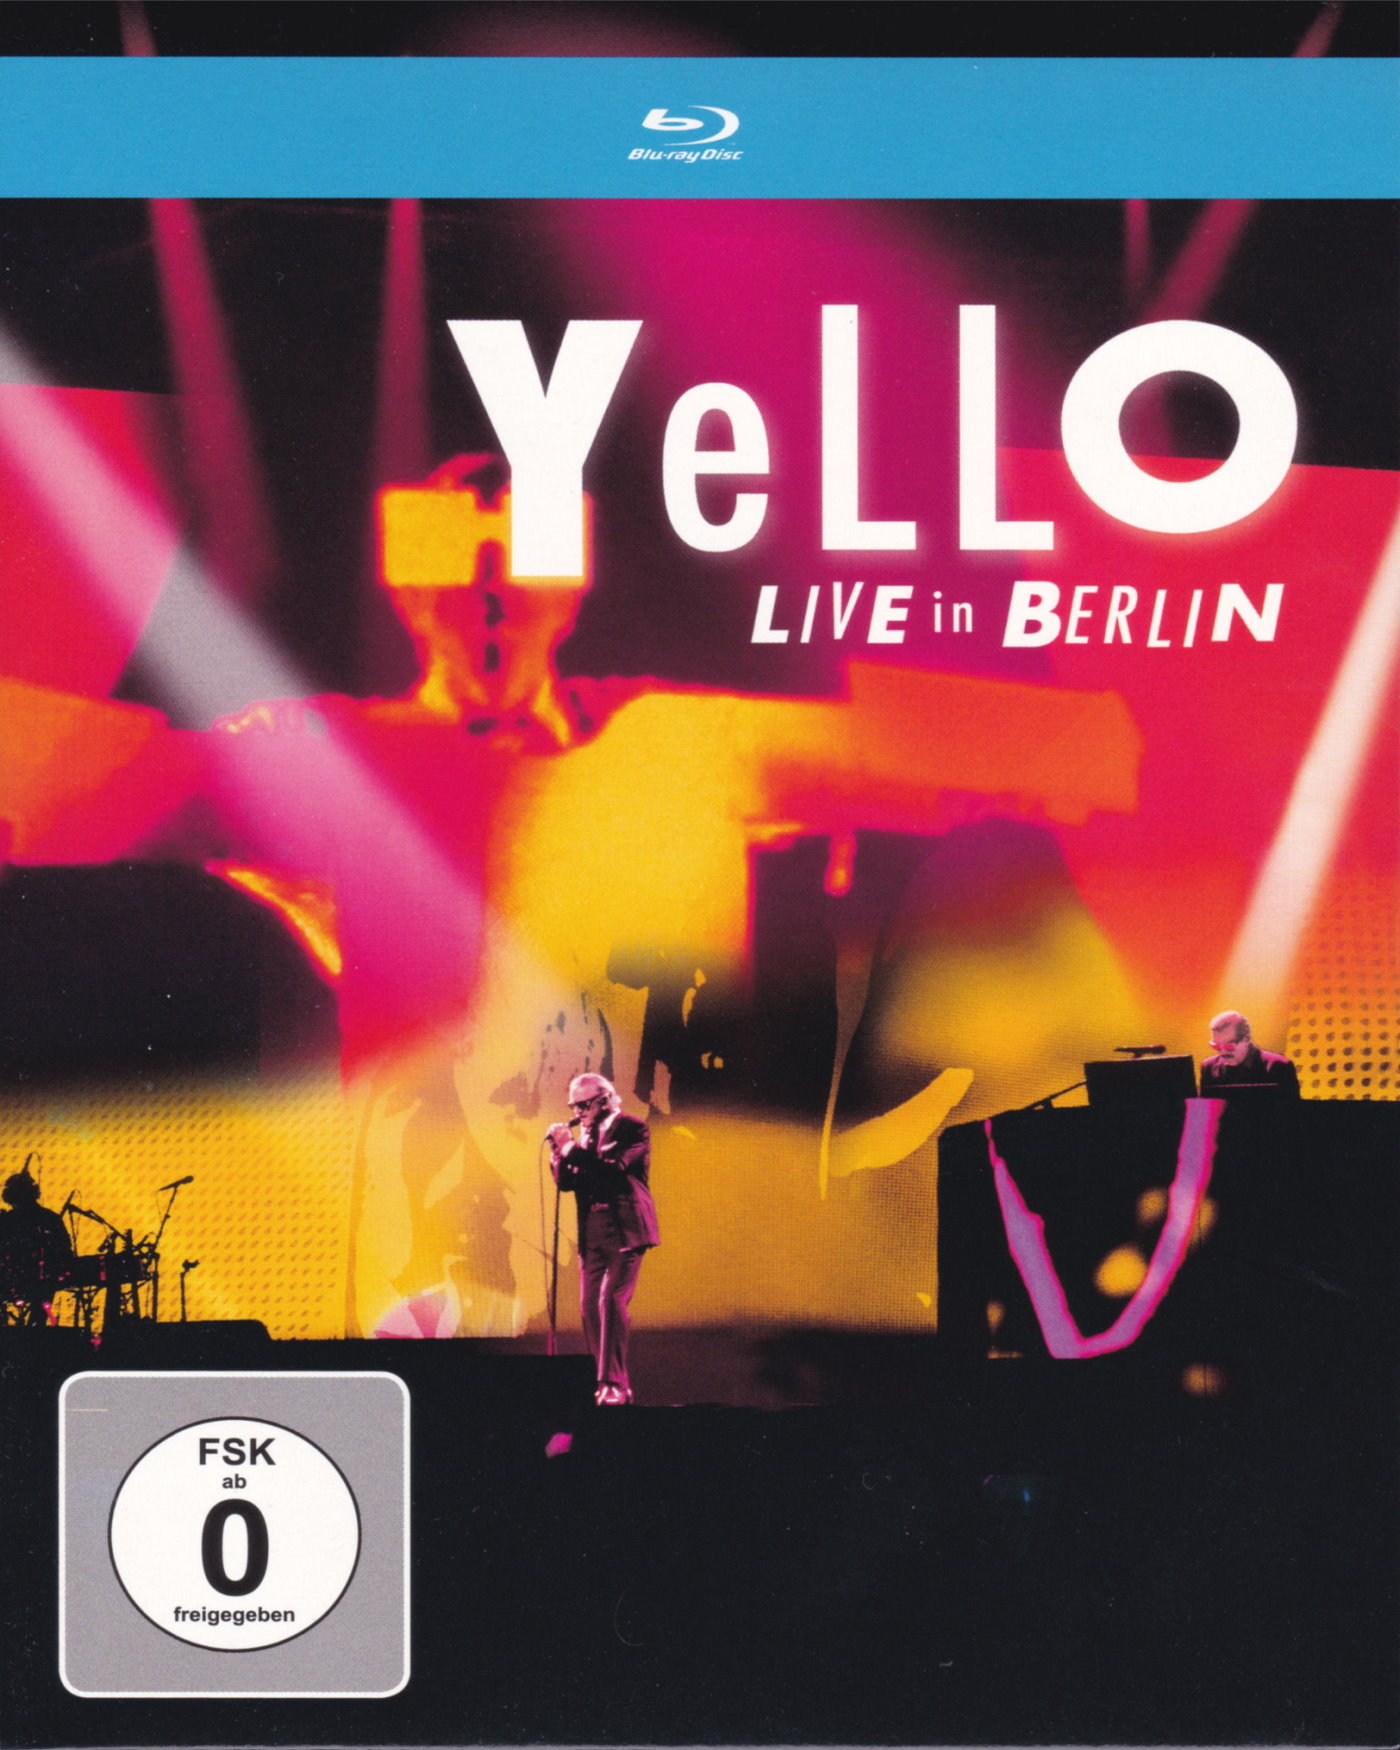 Cover - Yello - Live in Berlin.jpg